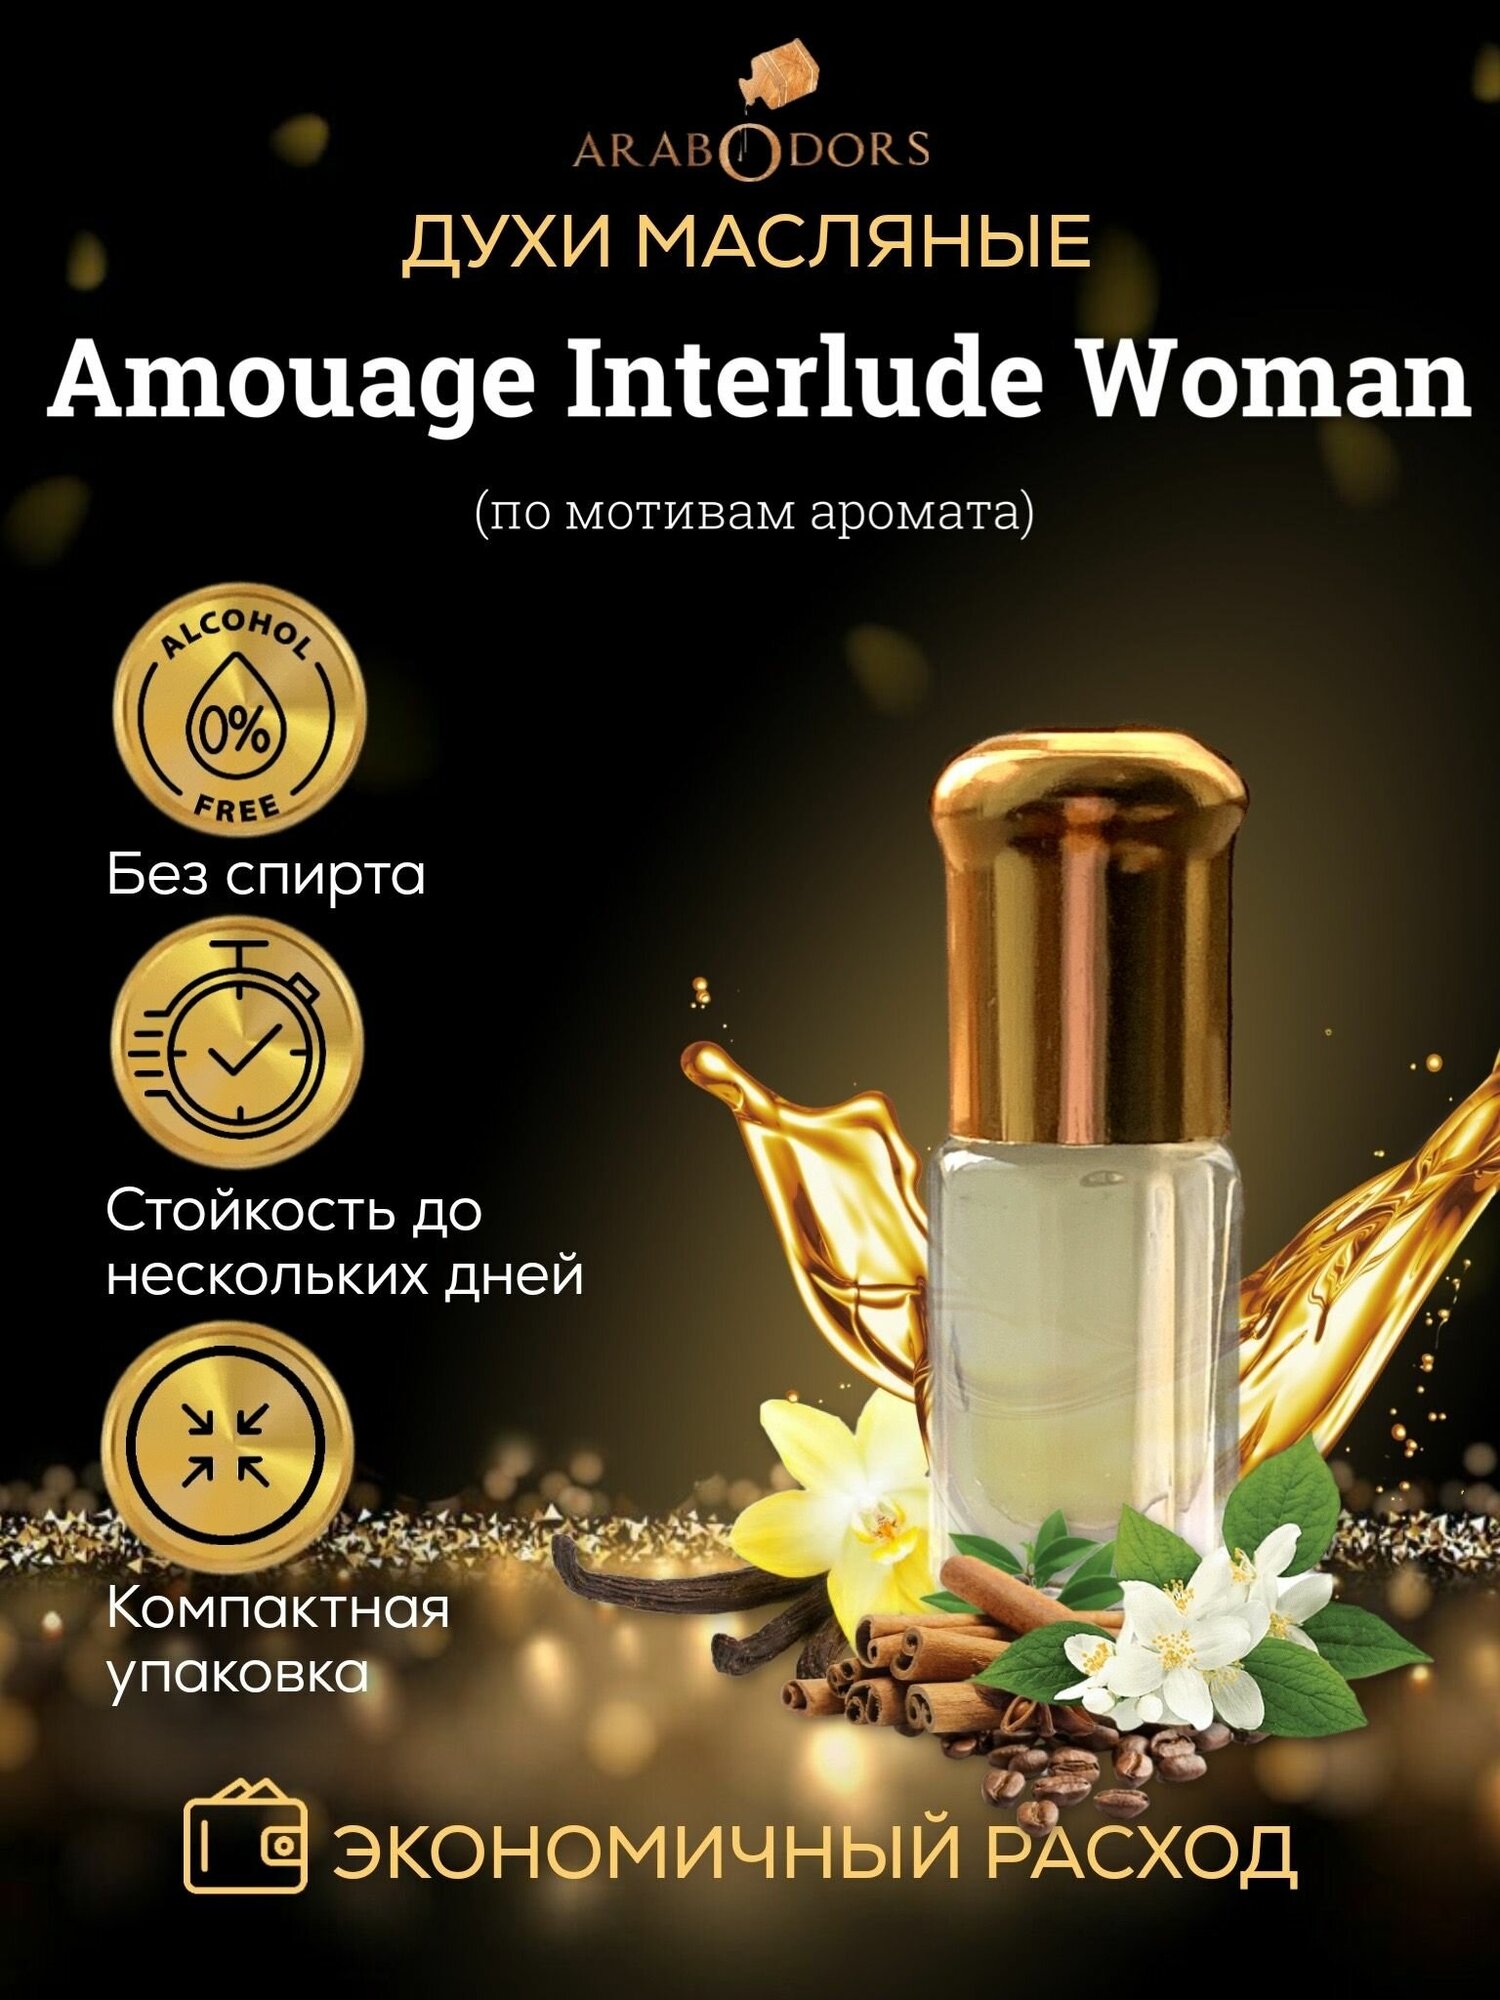 Arab Odors Interlude Woman Амуаж интерлюд женский масляные арабские духи